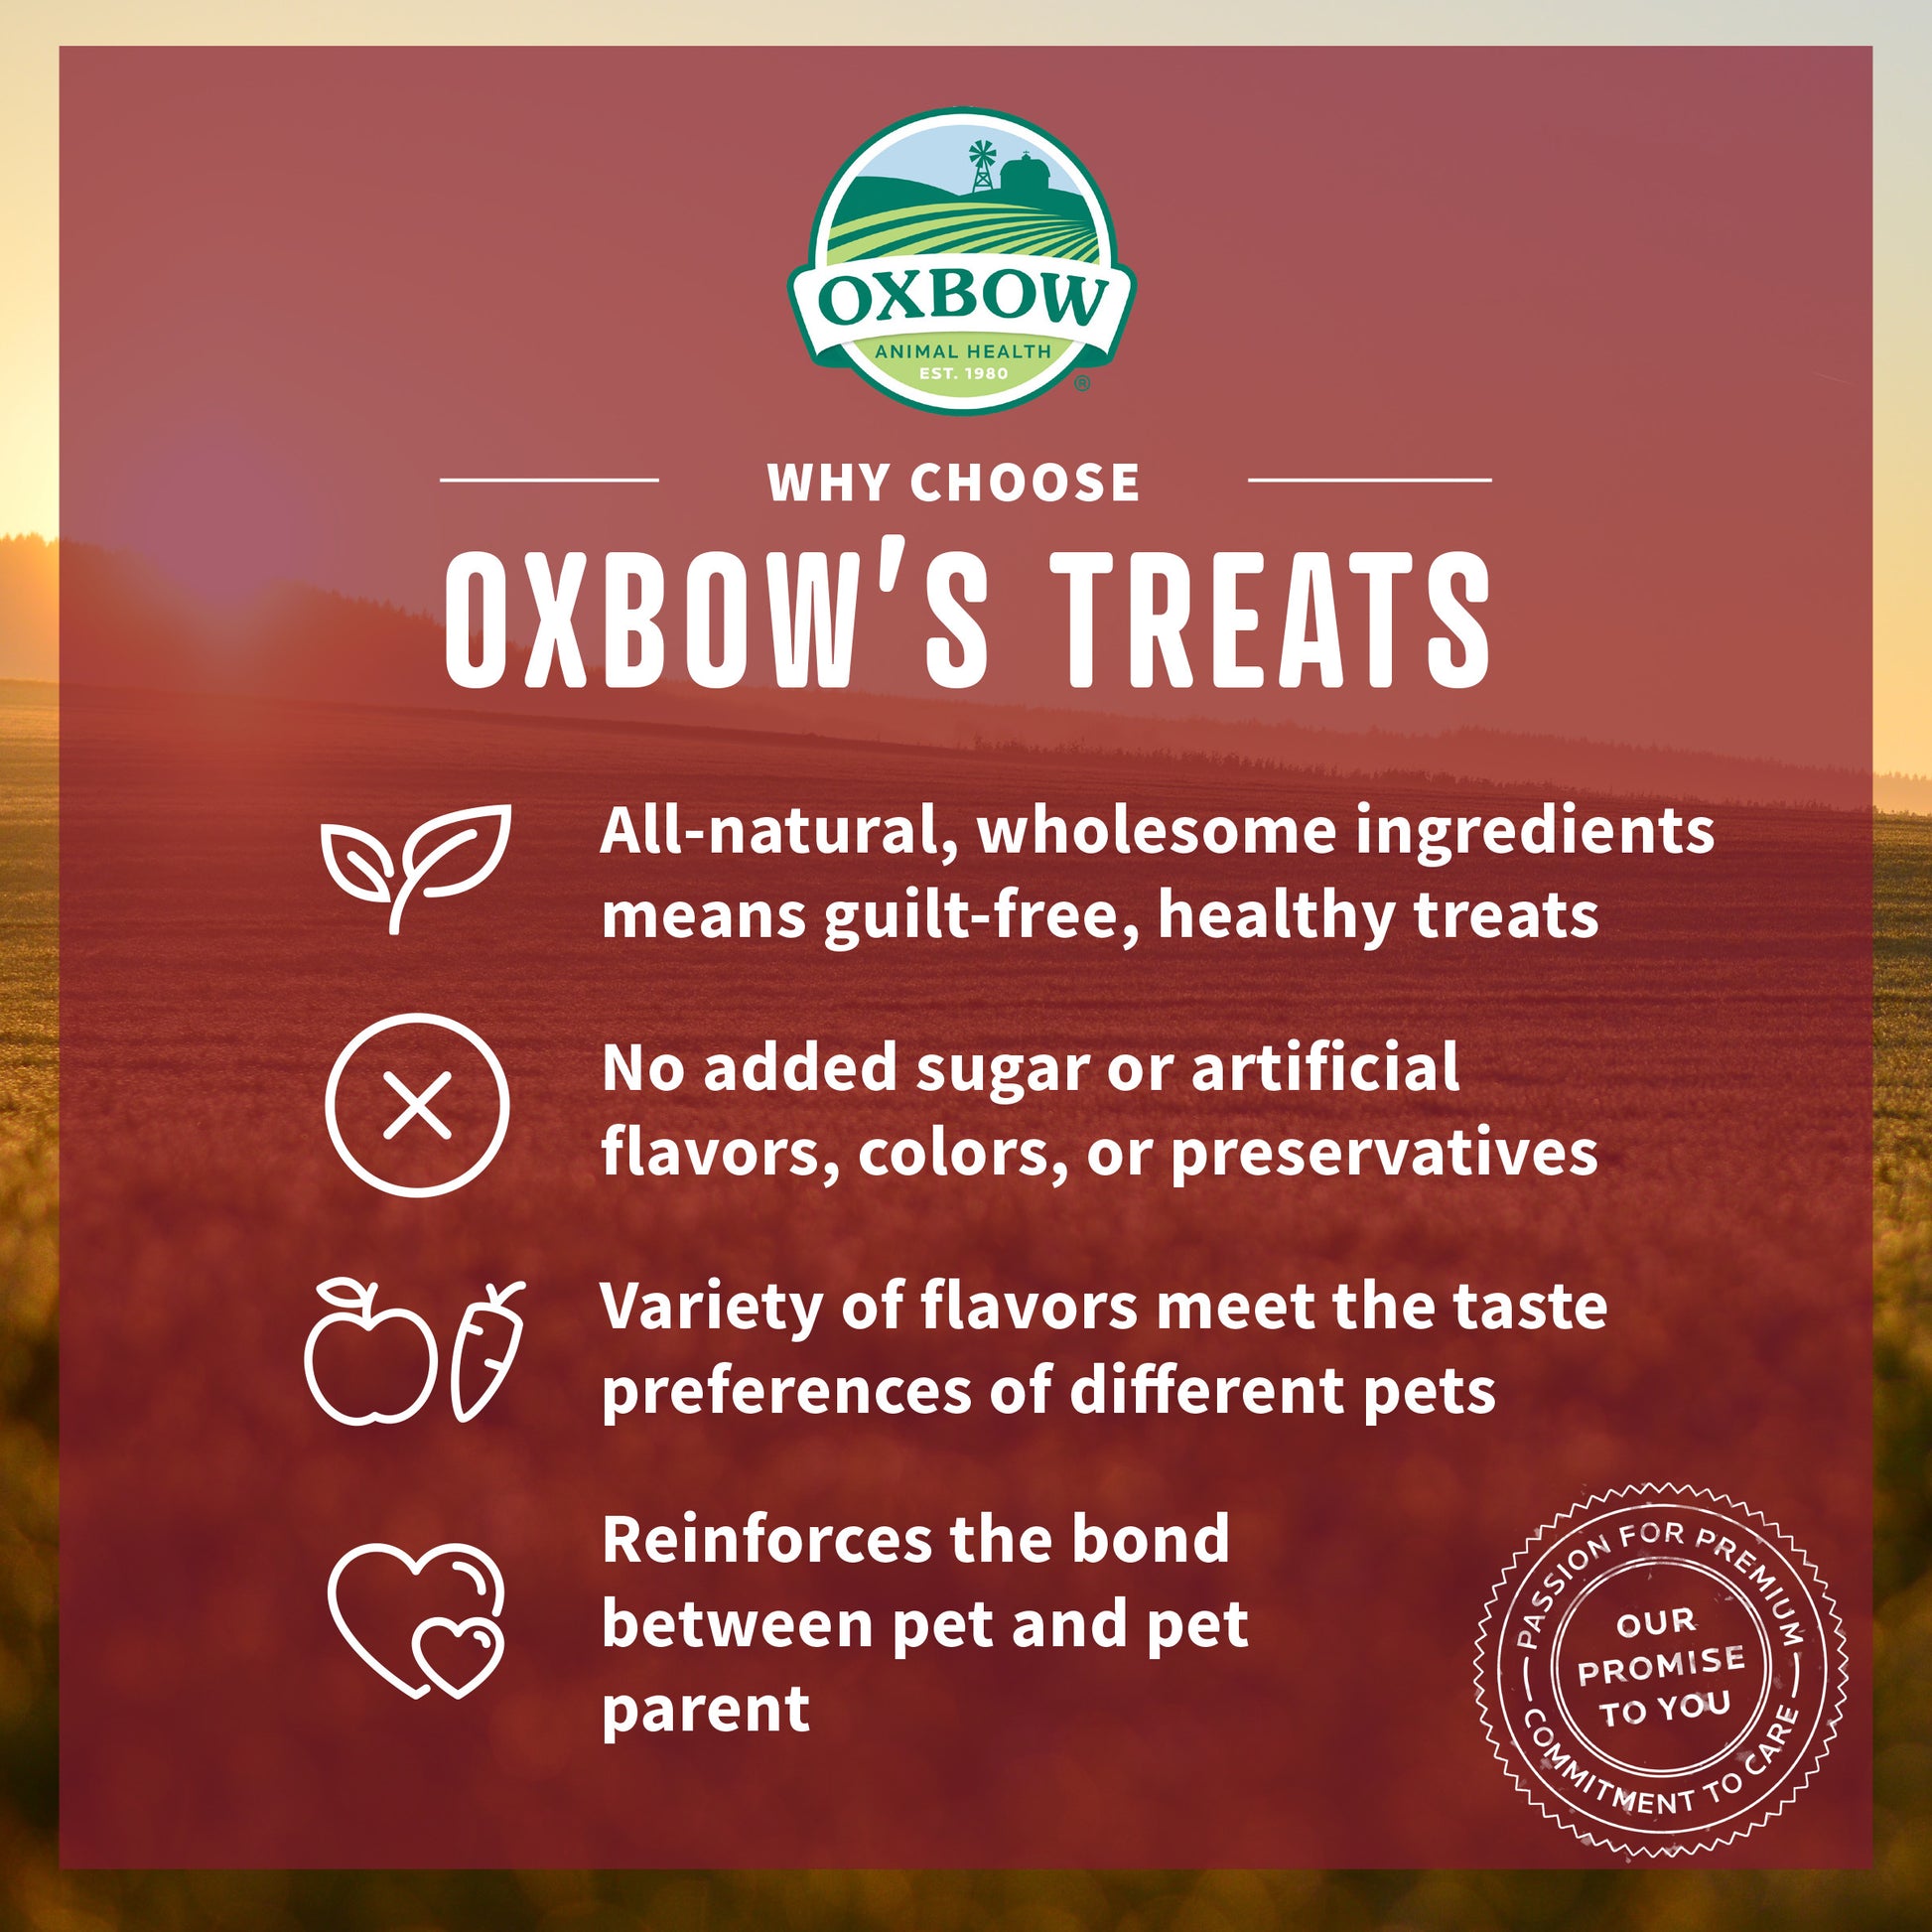 Oxbow treat promise.